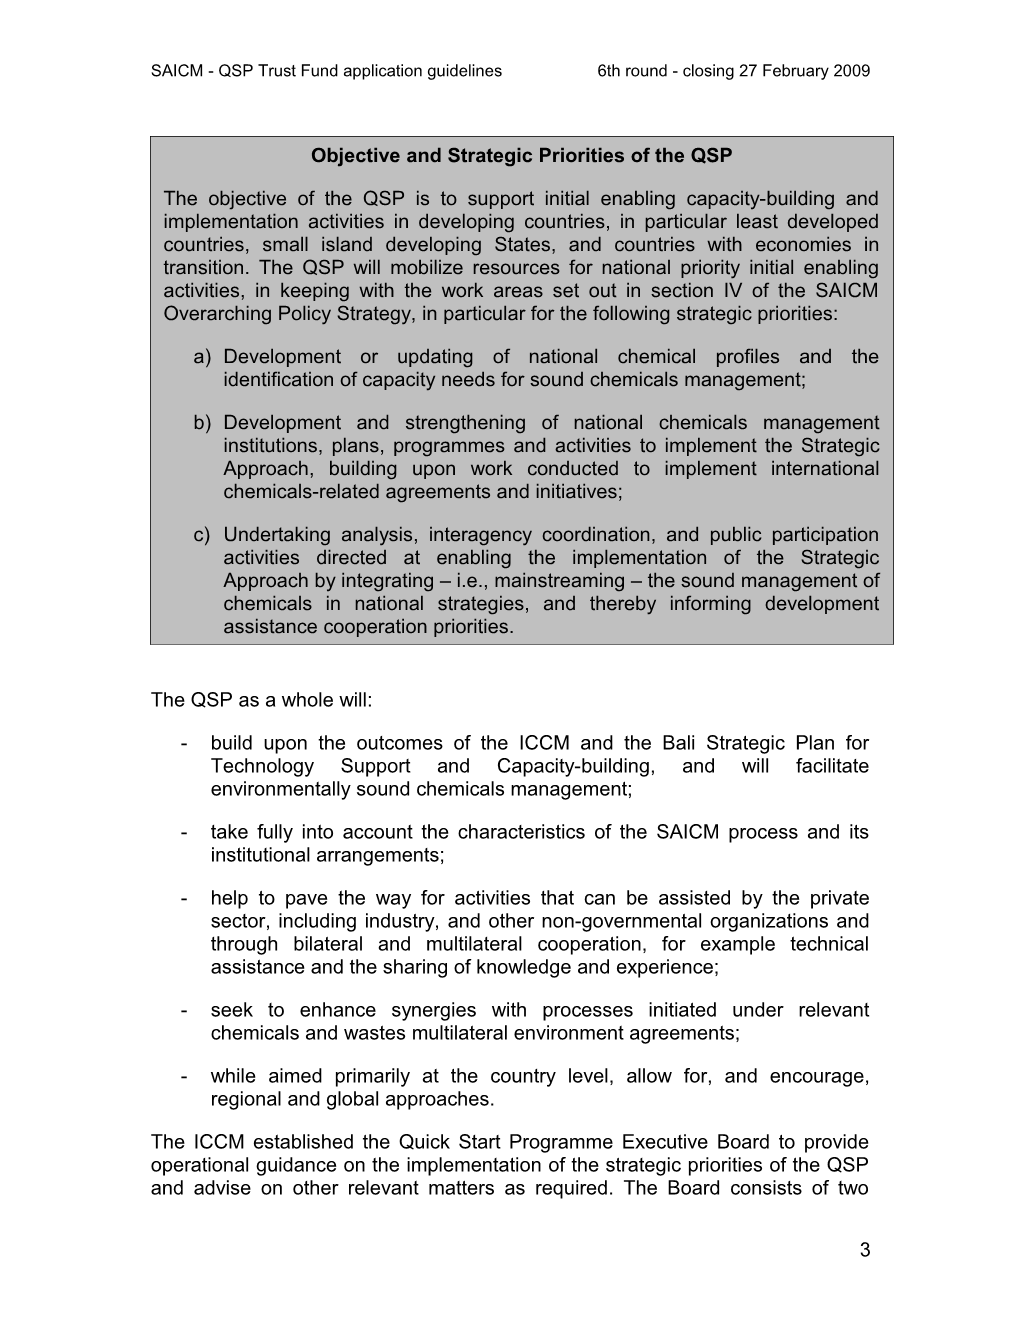 SAICM - QSP Trust Fund Application Guidelines 6Th Round - Closing 27 February 2009